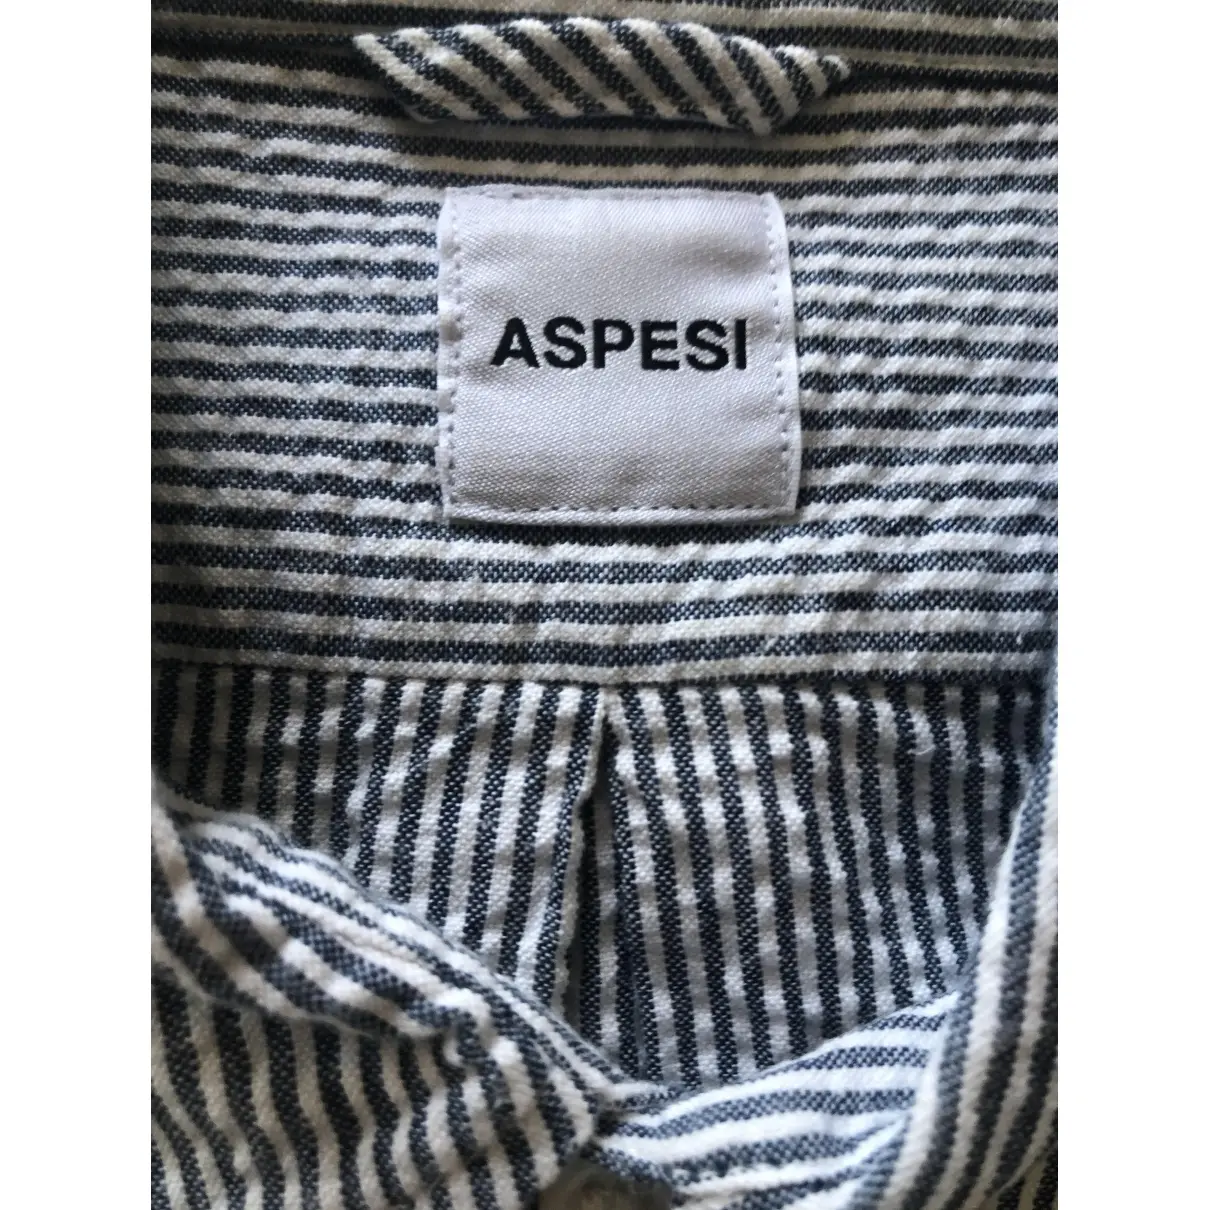 Aspesi Shirt for sale